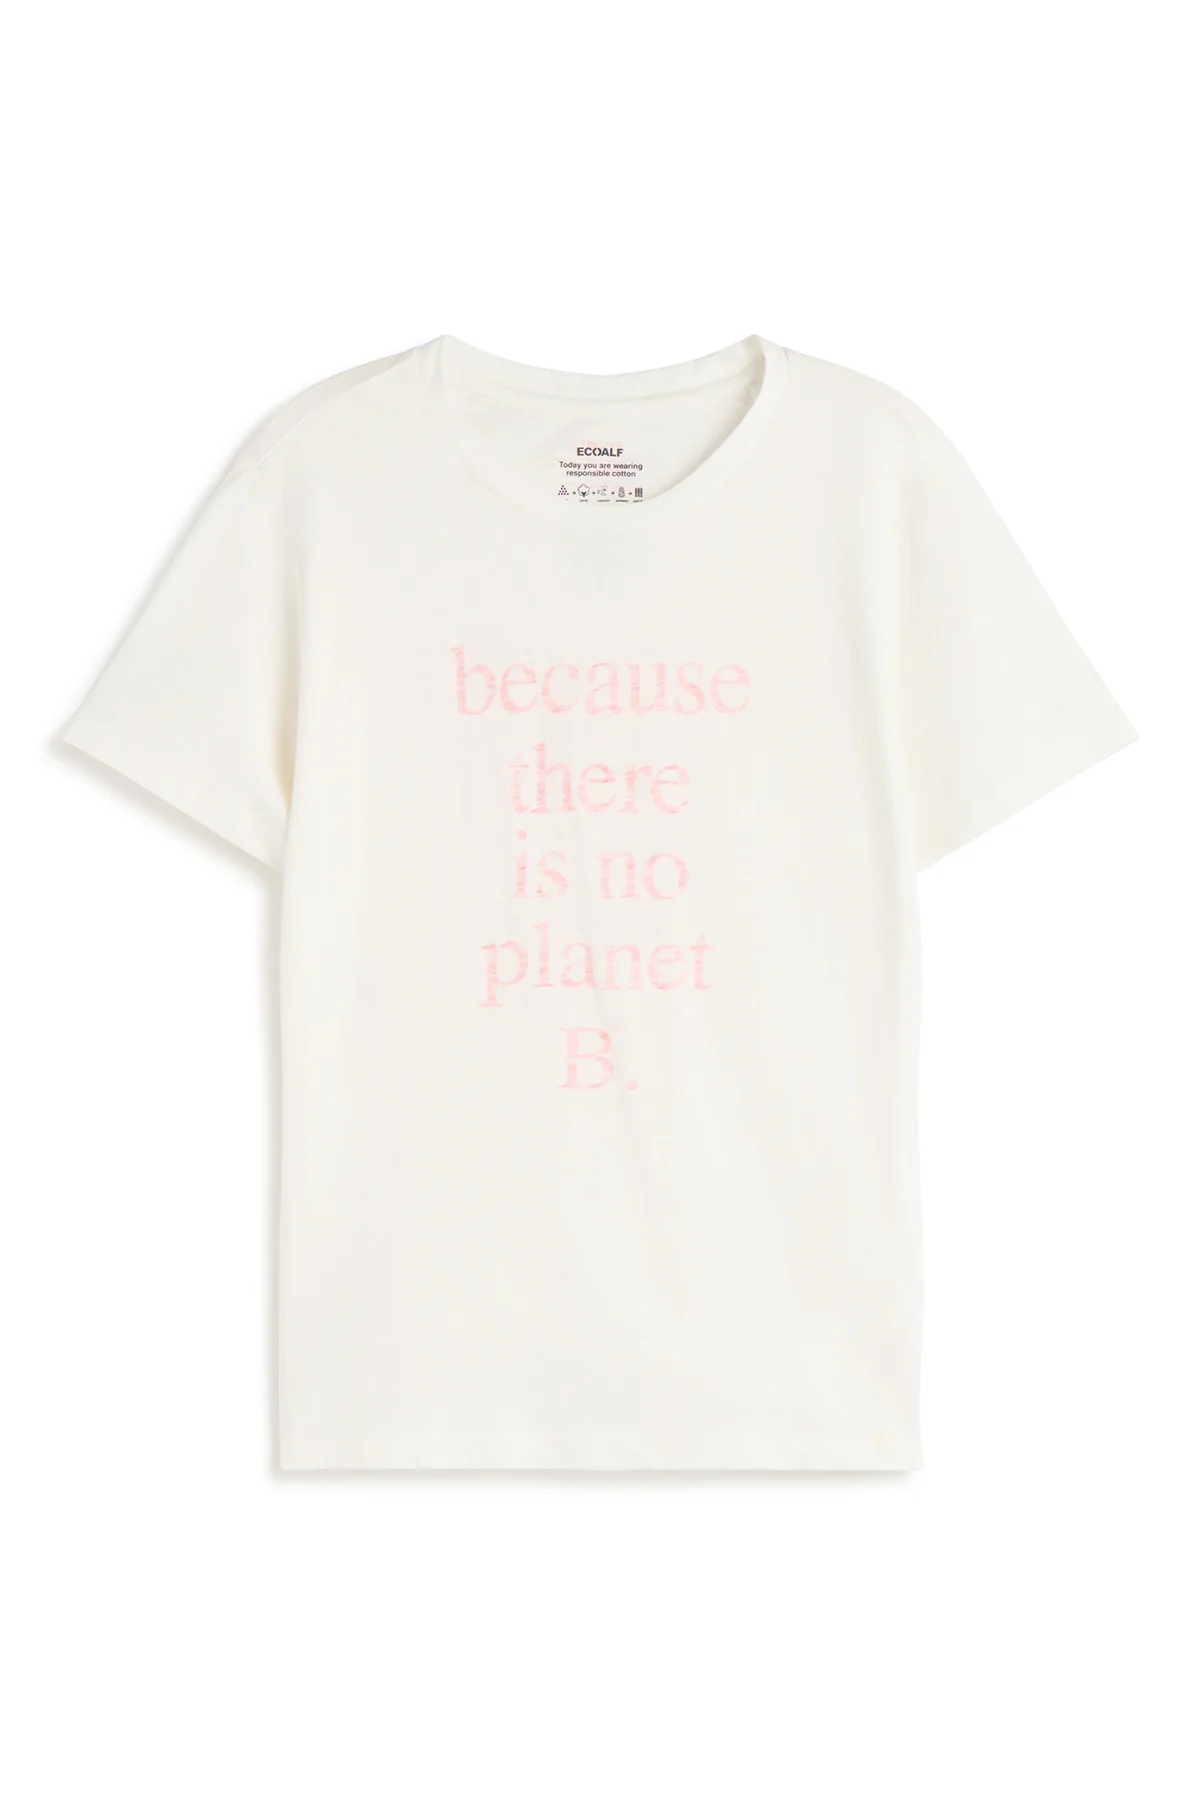 ECOALF camiseta manga corta color blanco con  lettering - 3